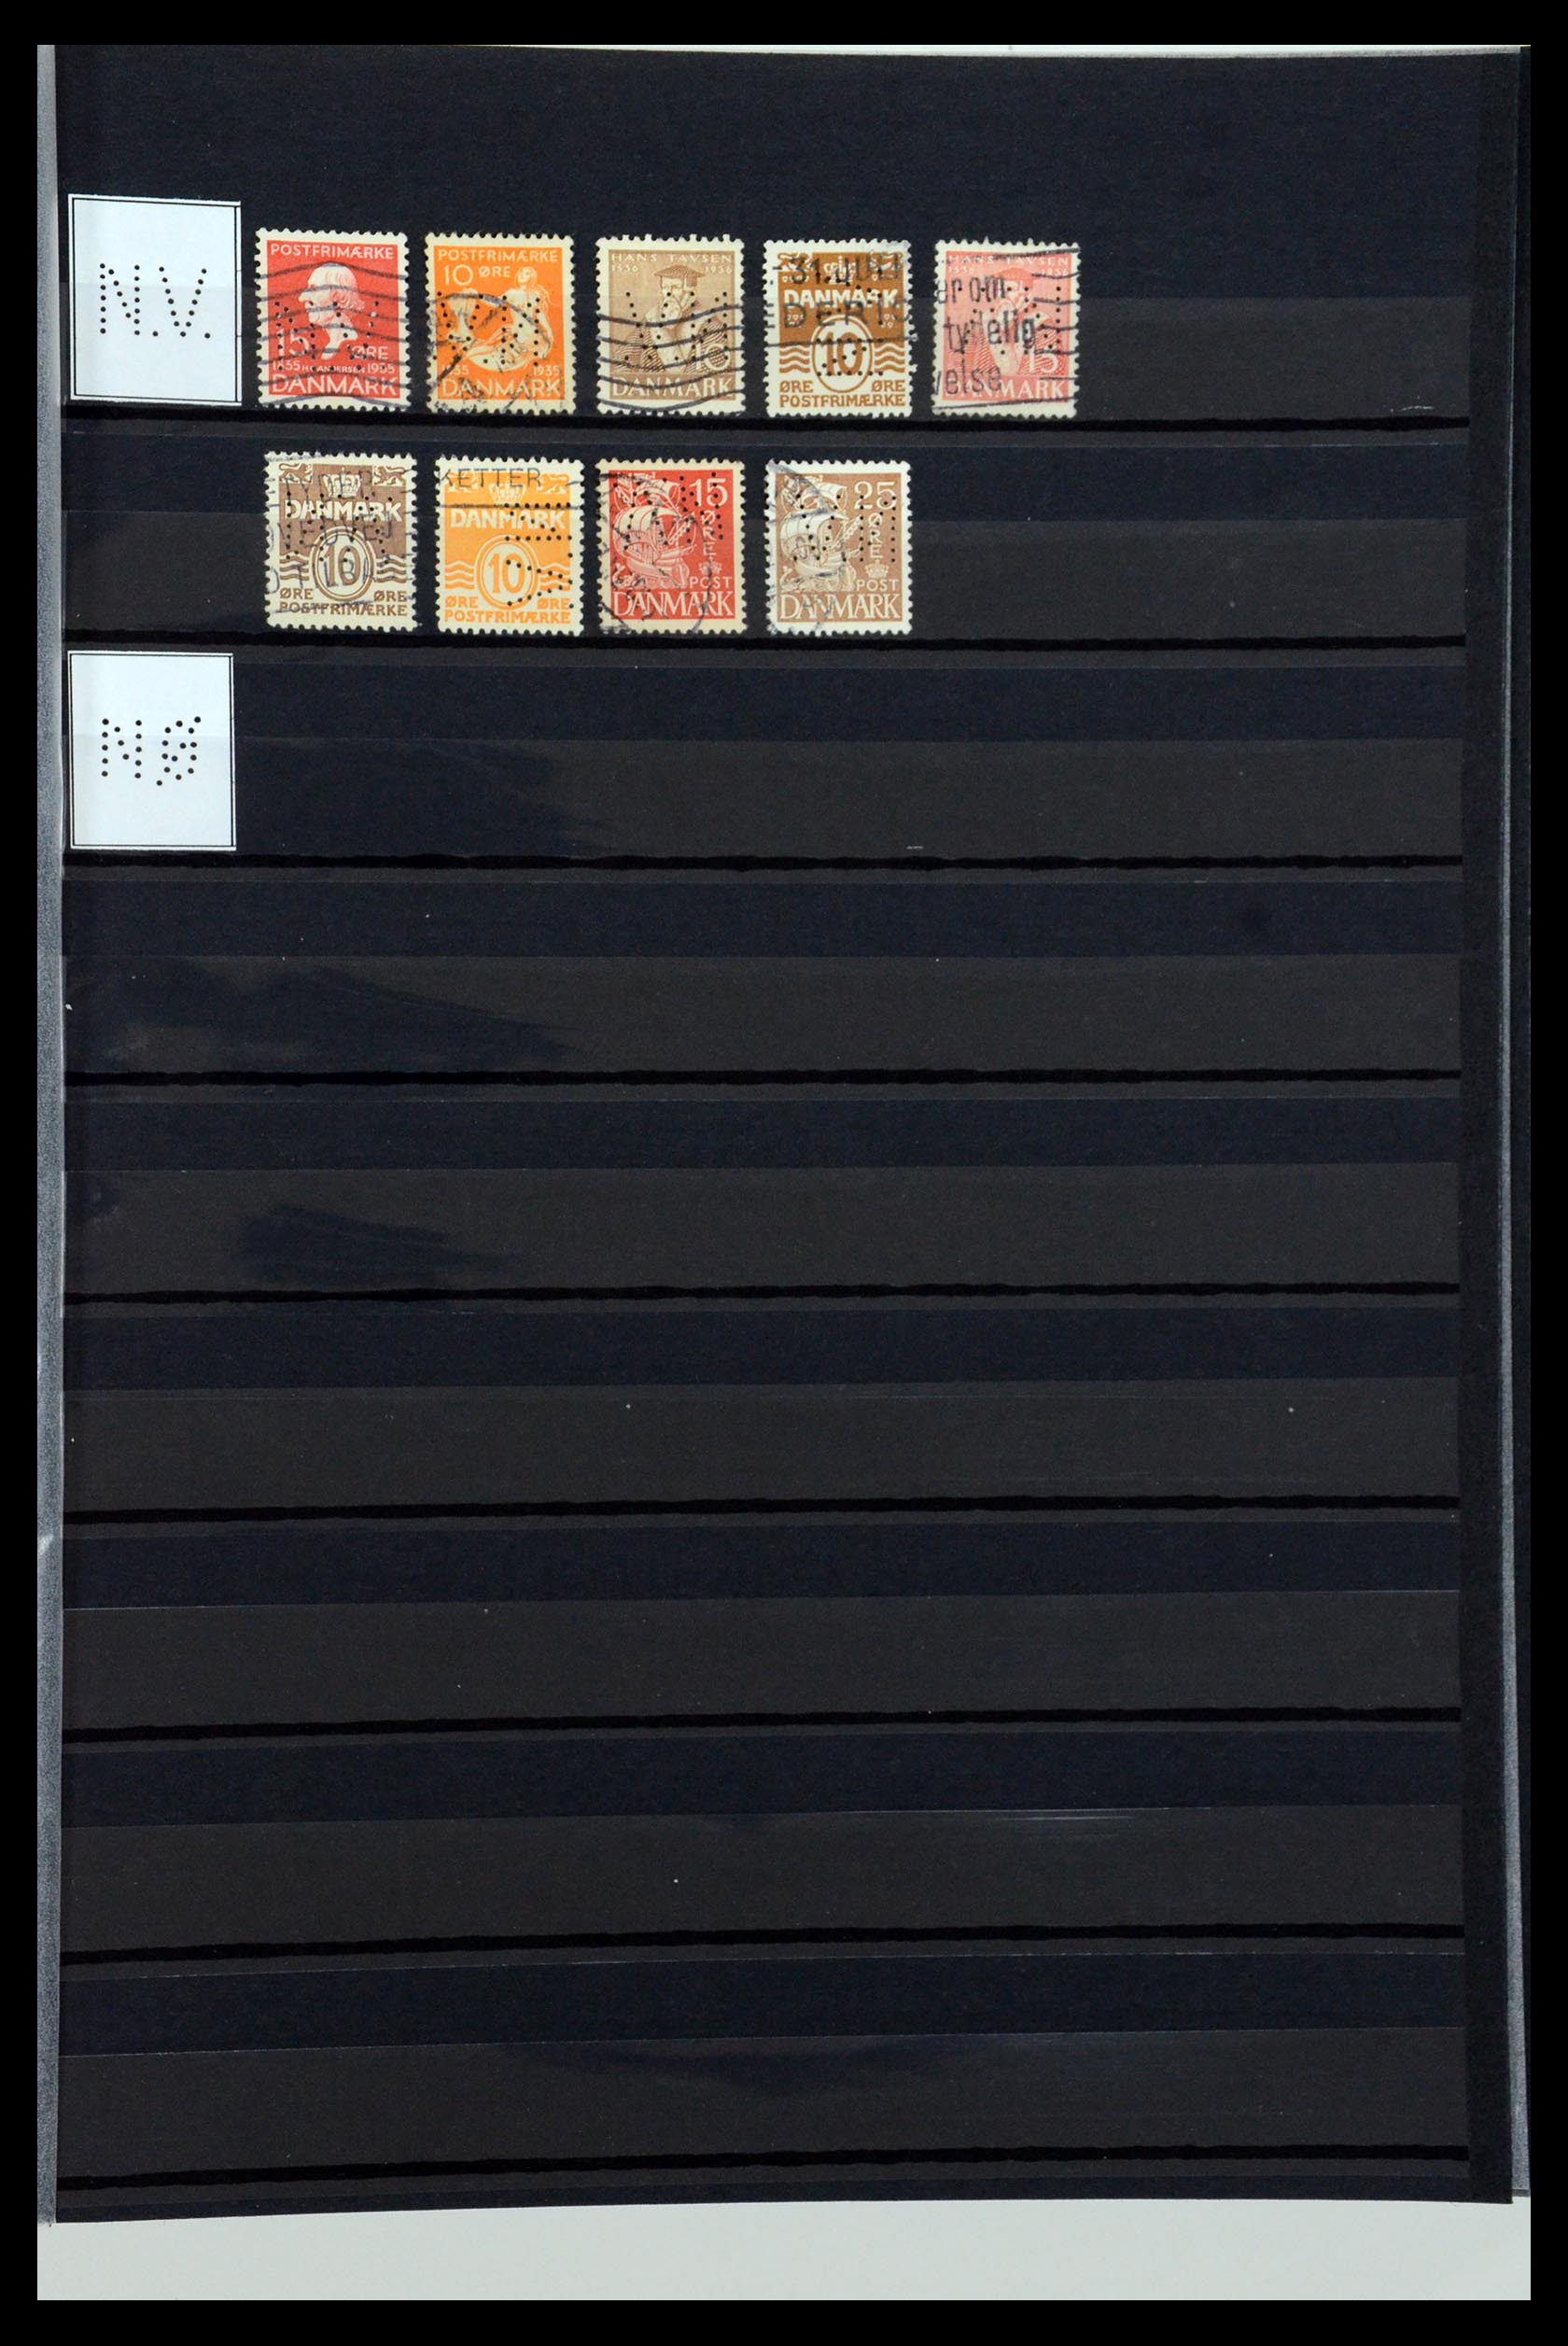 36396 184 - Stamp collection 36396 Denmark perfins.